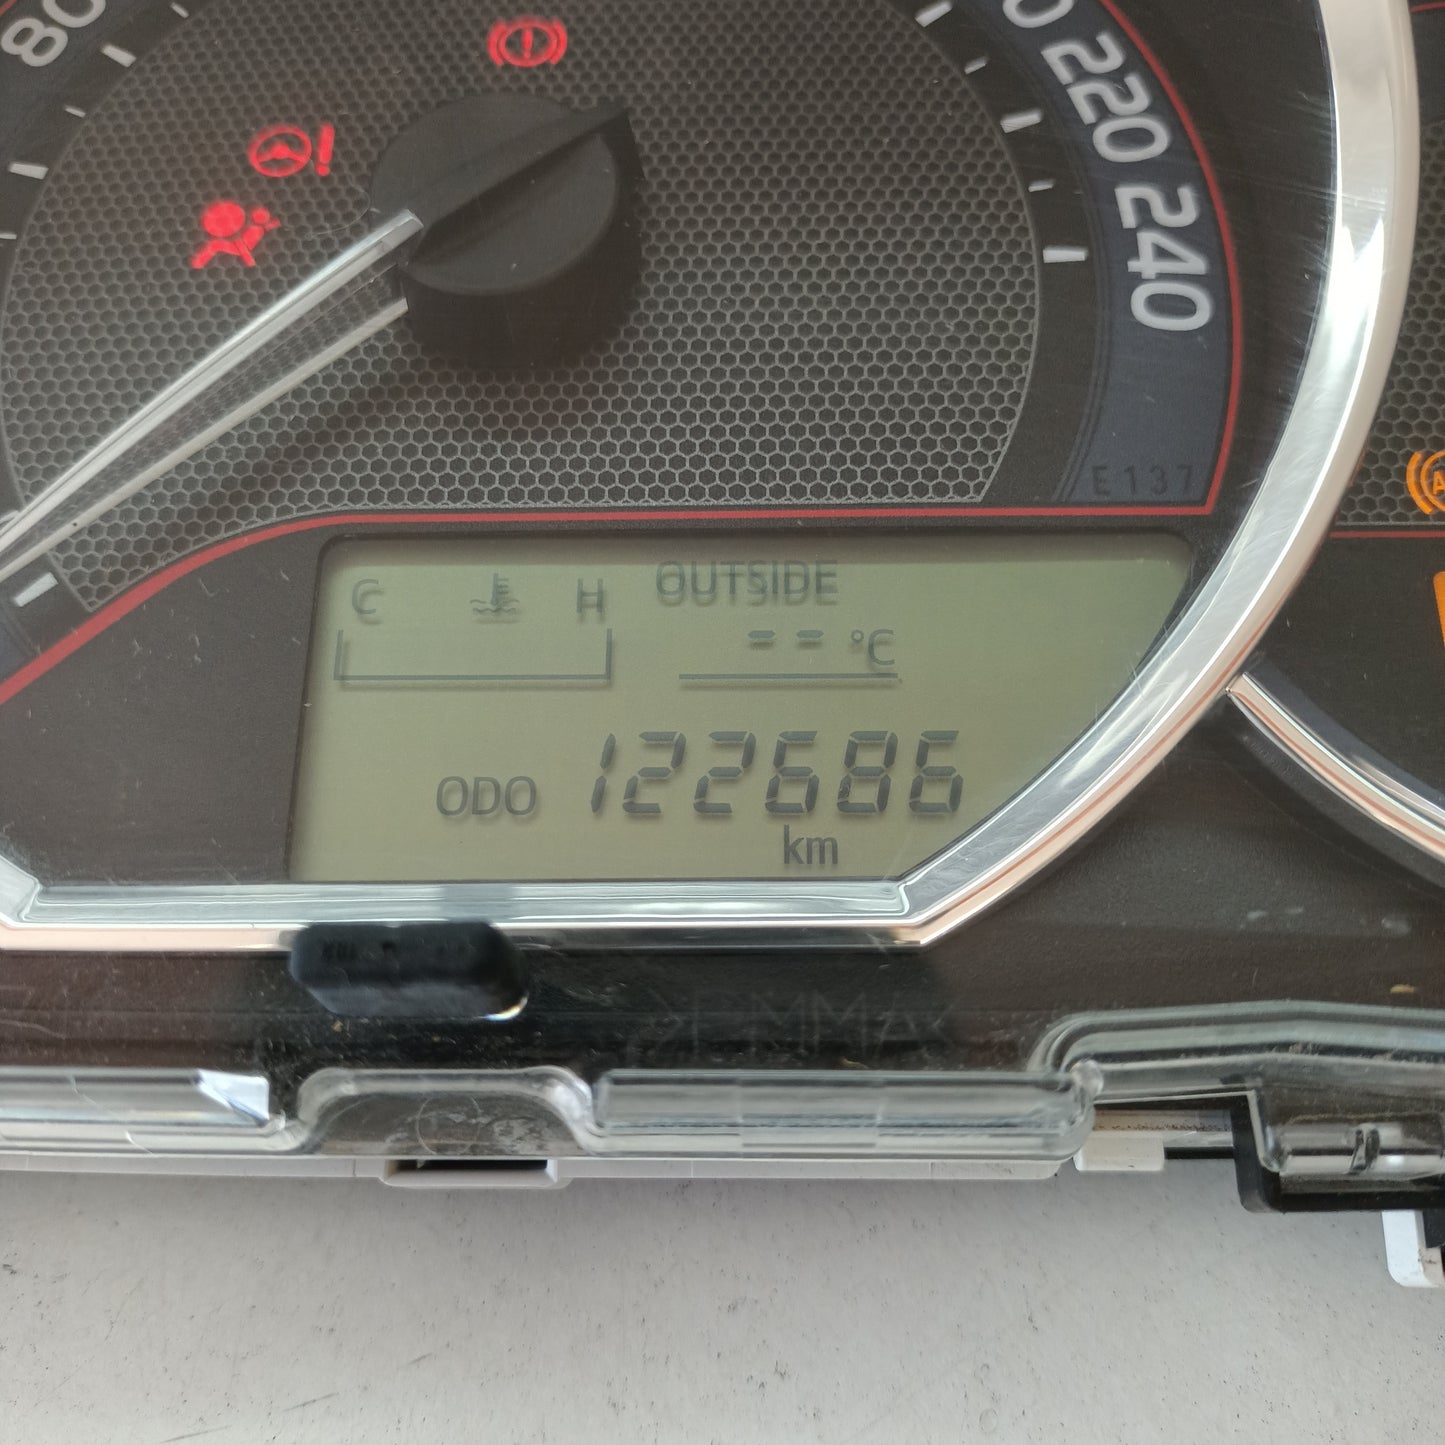 Toyota Corolla Hatchback Instrument Cluster ZRE182R 2012 2013 2014 2015 122686km